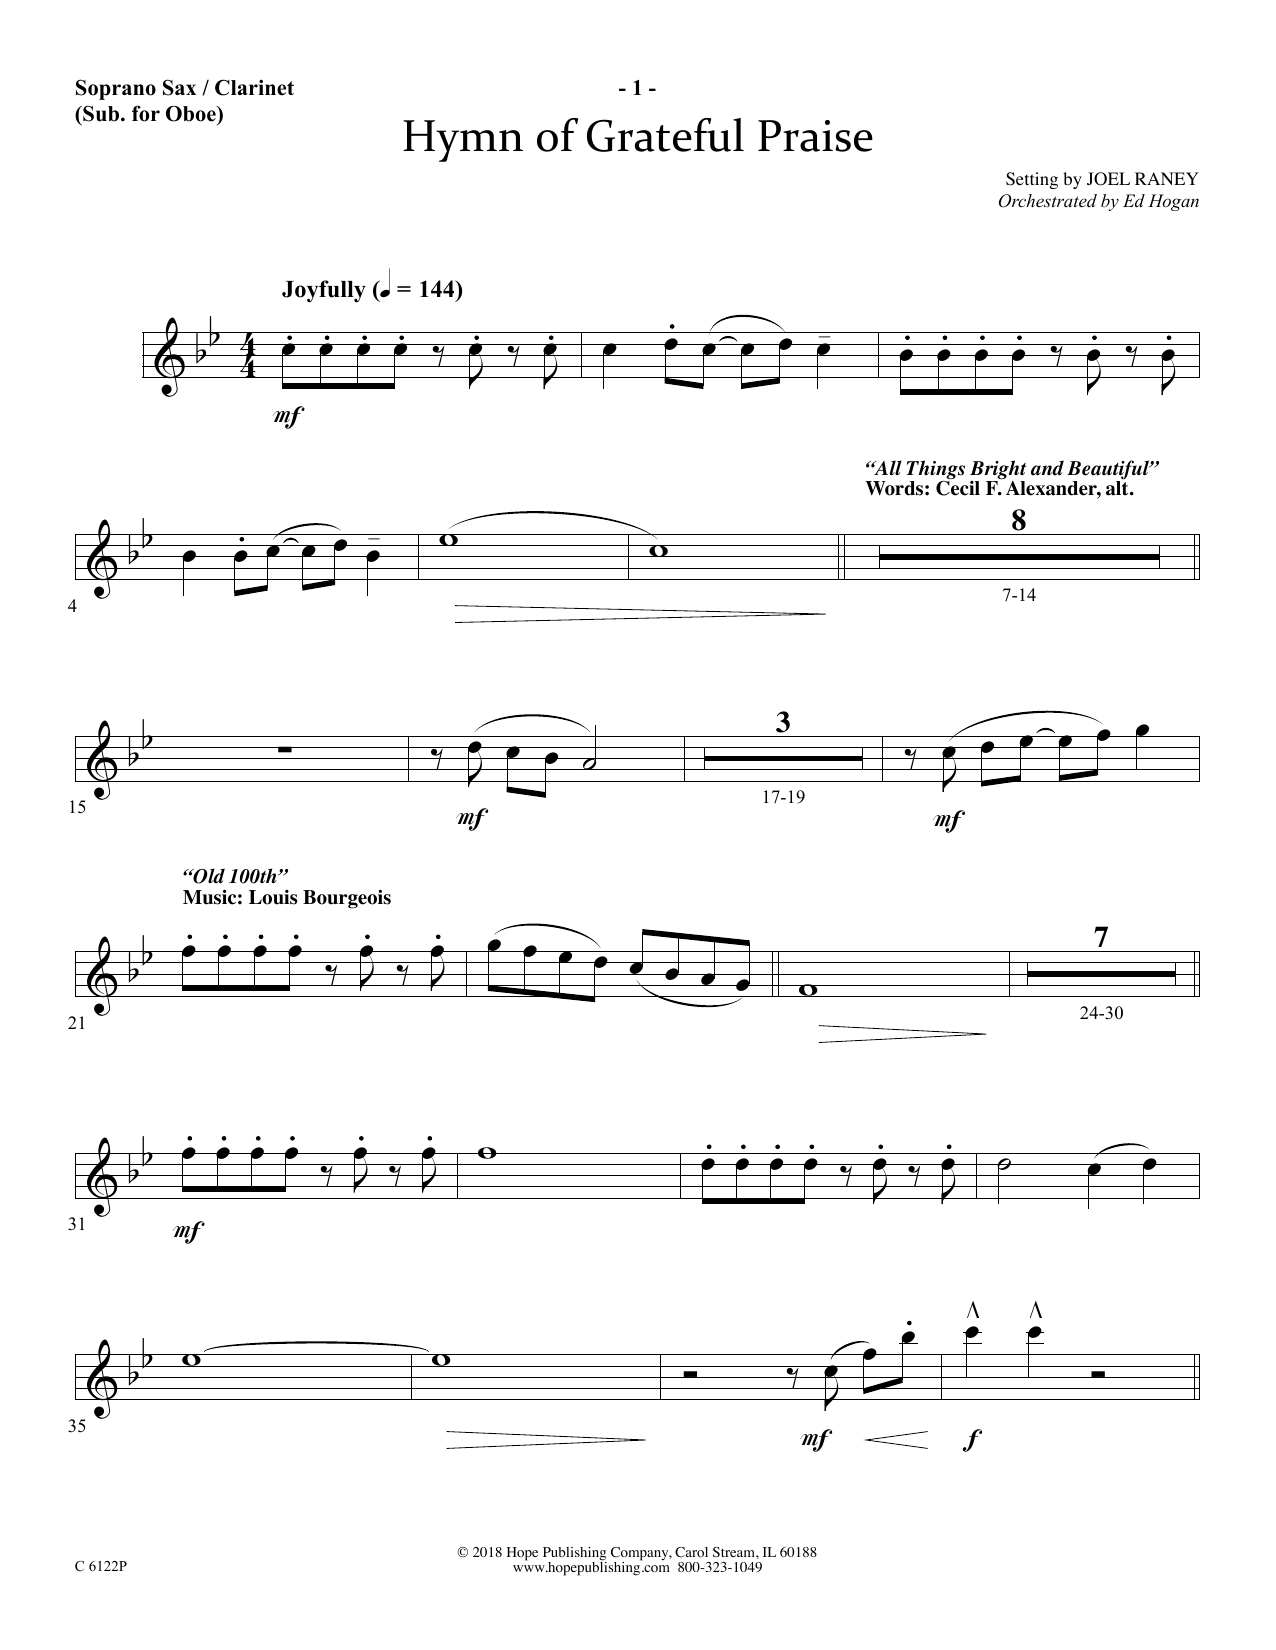 Download Joel Raney Hymn Of Grateful Praise - Soprano Sax/Clarinet(sub oboe) Sheet Music and learn how to play Choir Instrumental Pak PDF digital score in minutes